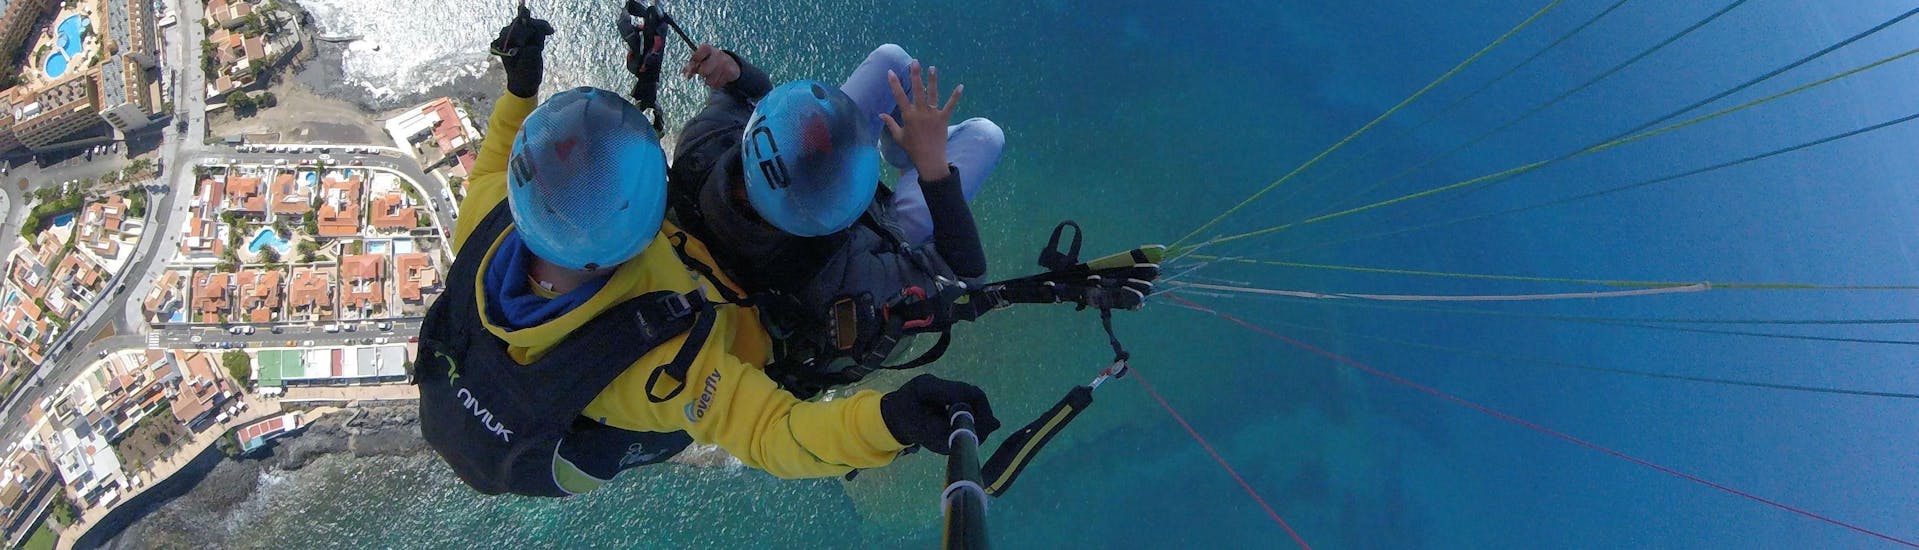 Tandem Paragliding in Teneriffa - Termik.